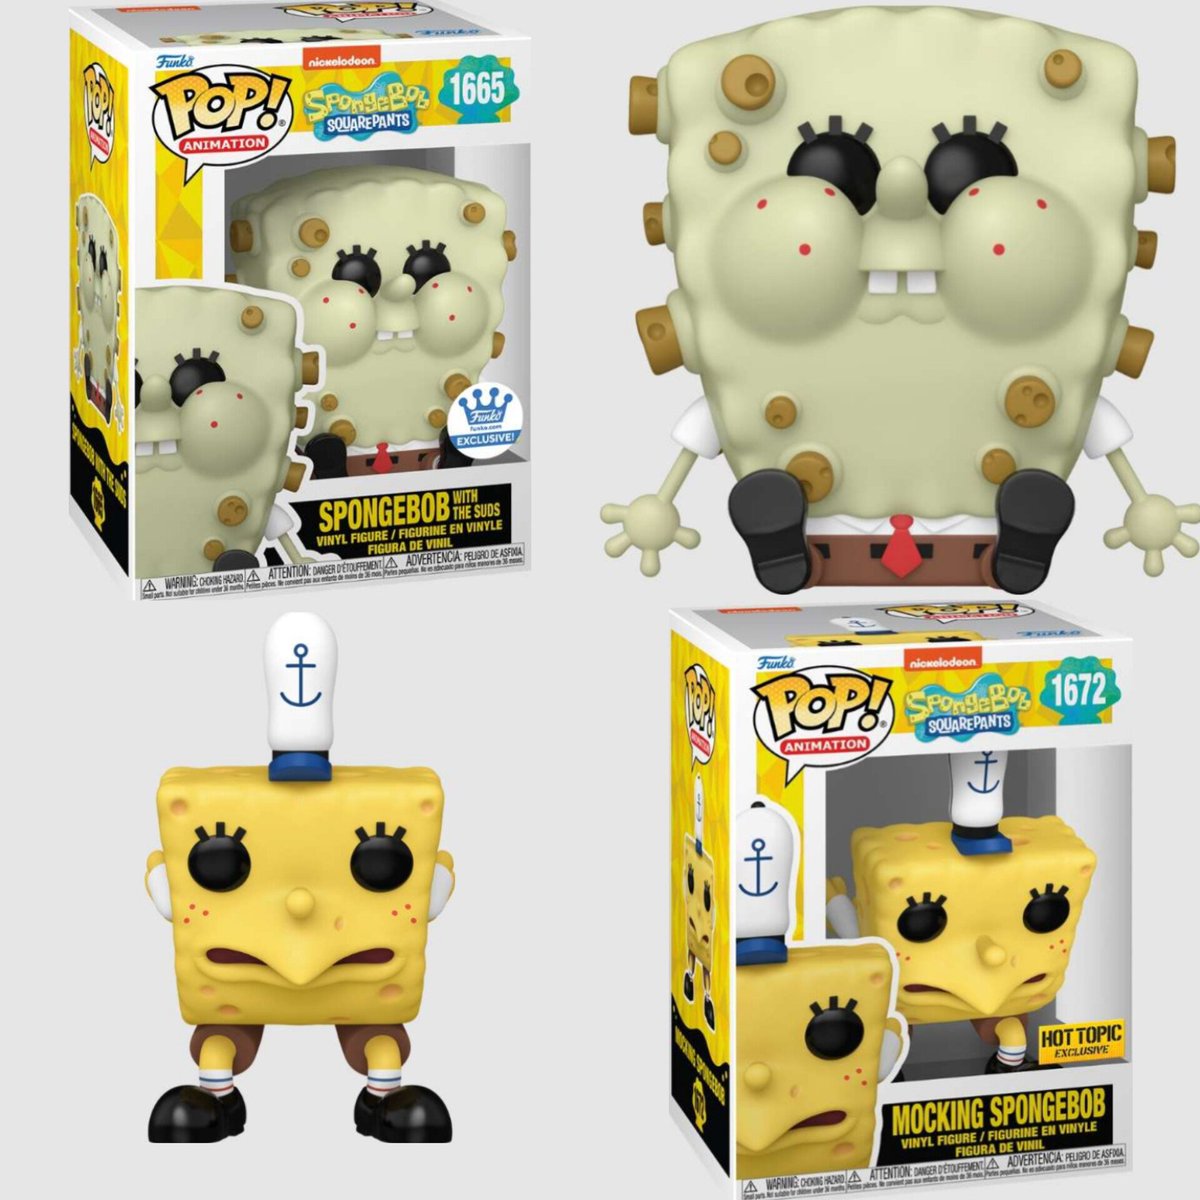 First look at Spongebob exclusives!
Funko shop exclusive Spongebob with the suds Funko Pop
And Hot Topic exclusive Mocking Spongebob

#spongebob #spongebob25thanniversary #spongebobsquarepants #spongebobwiththesuds #FunkoPopVinyl #FunkoNews #FunkoPopsNews #FunkoSoda #FunkoChase